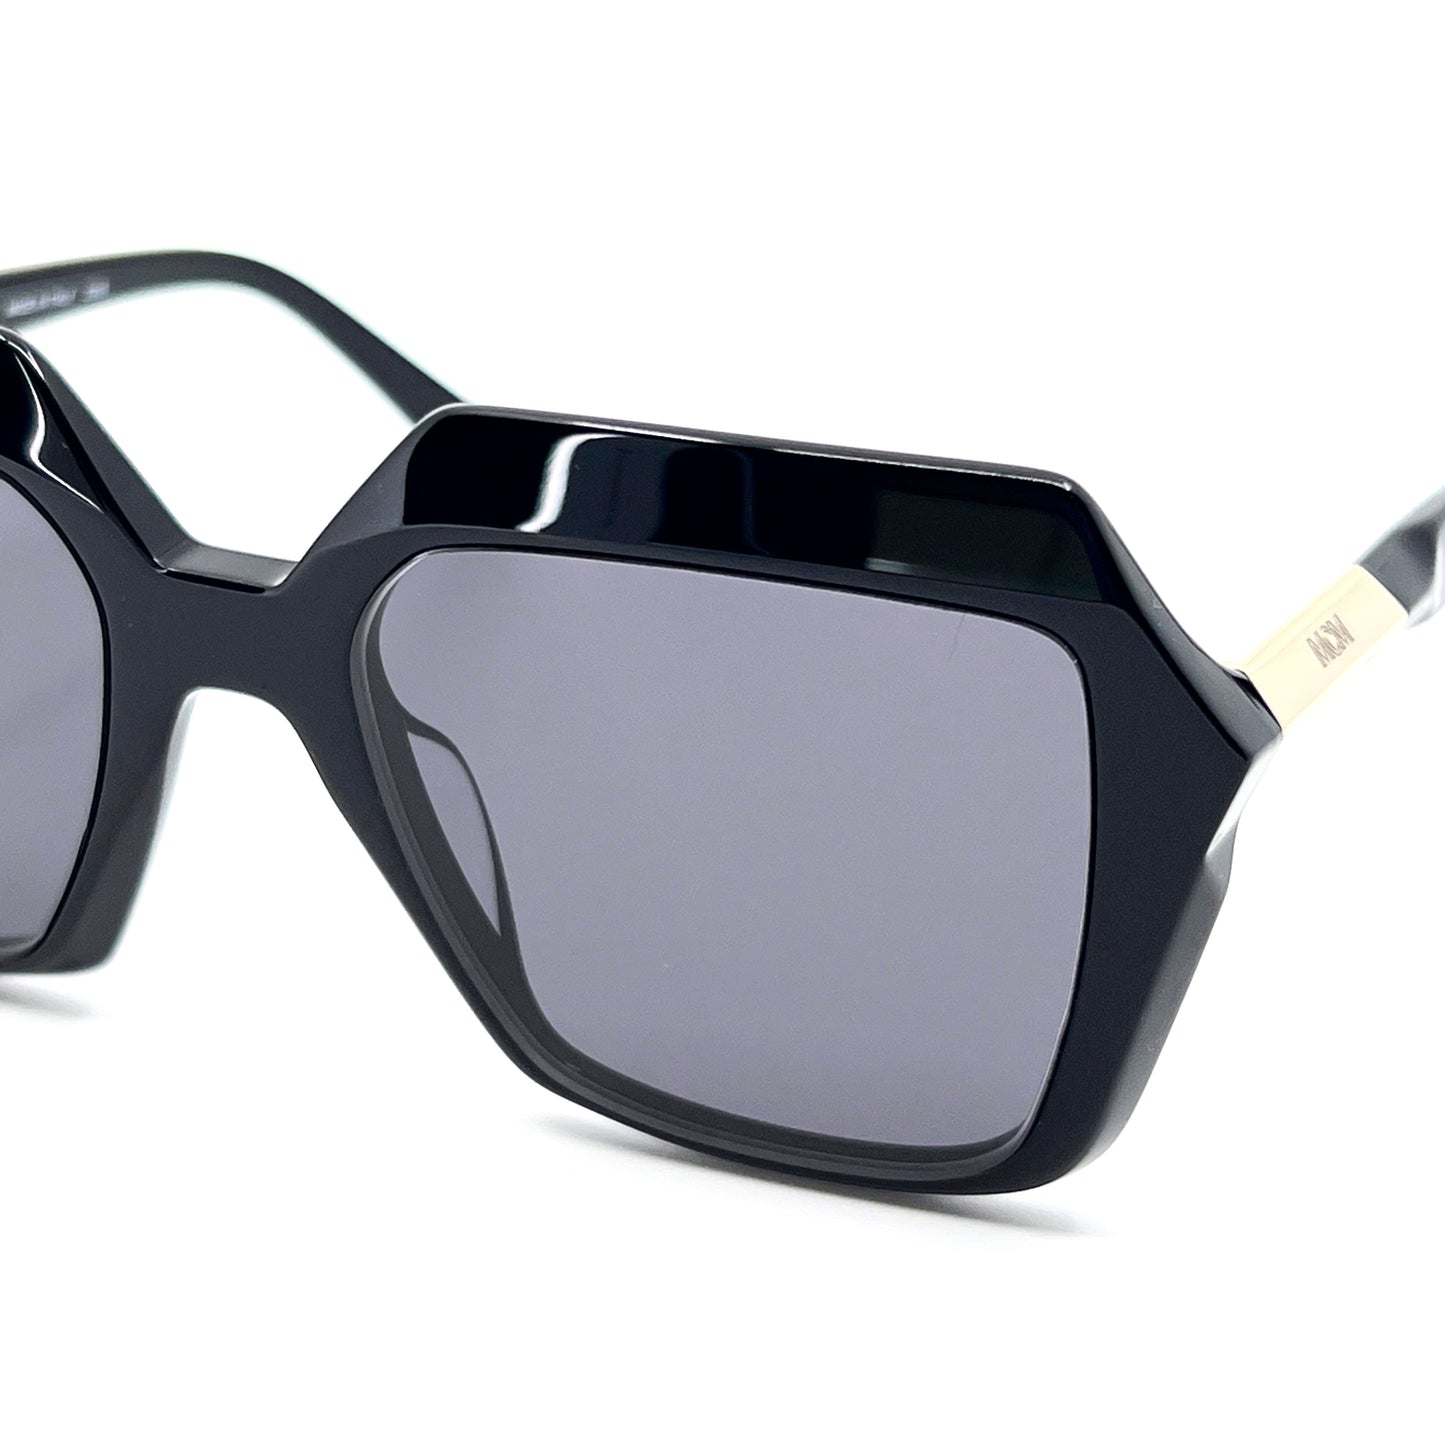 MCM Sunglasses 661S 001